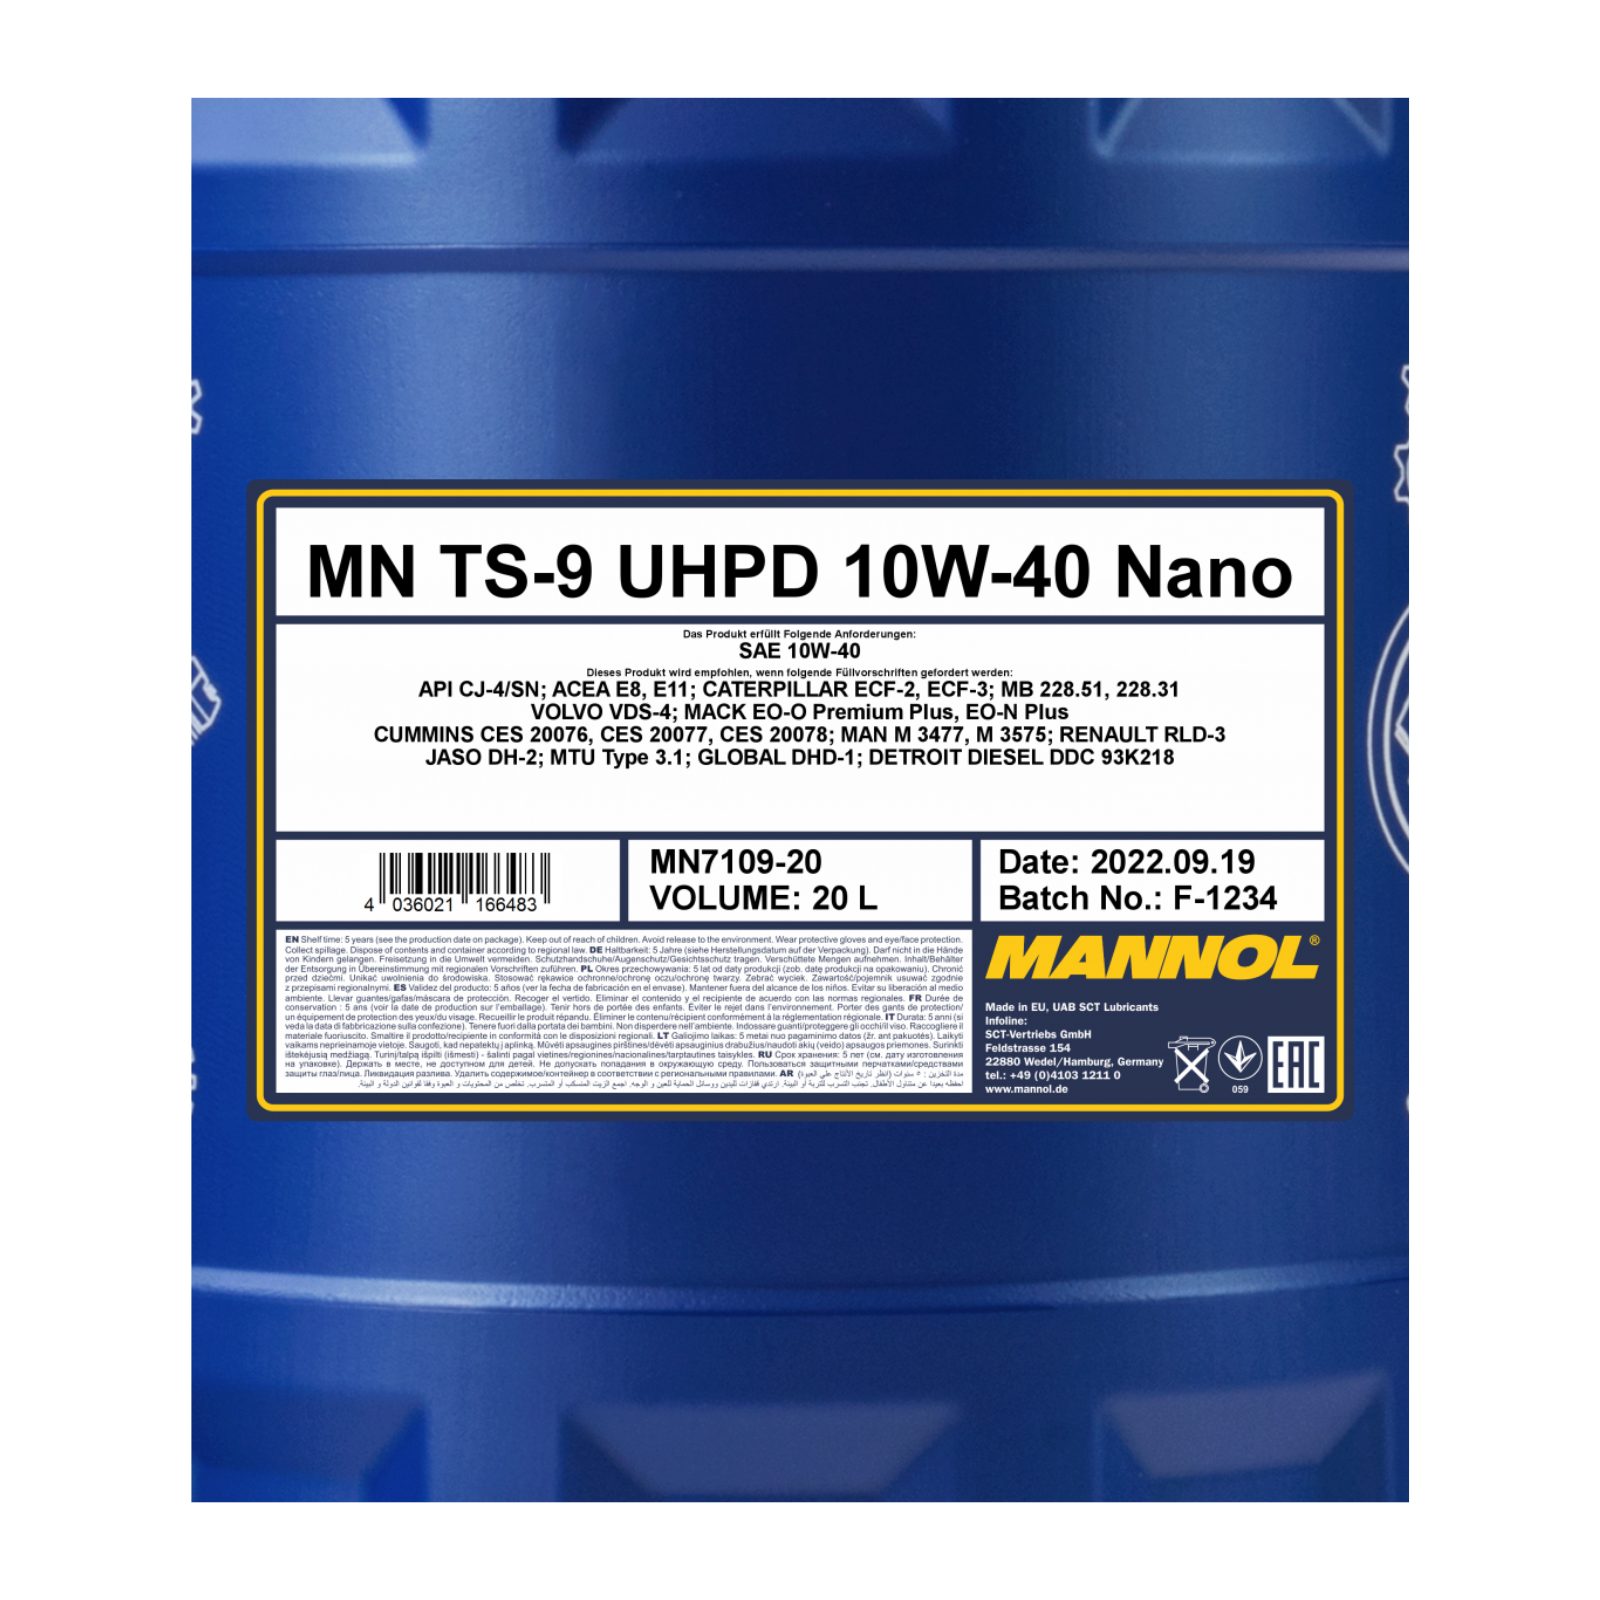 Mannol 7109 TS-9 UHPD 10W-40 Nano 20L